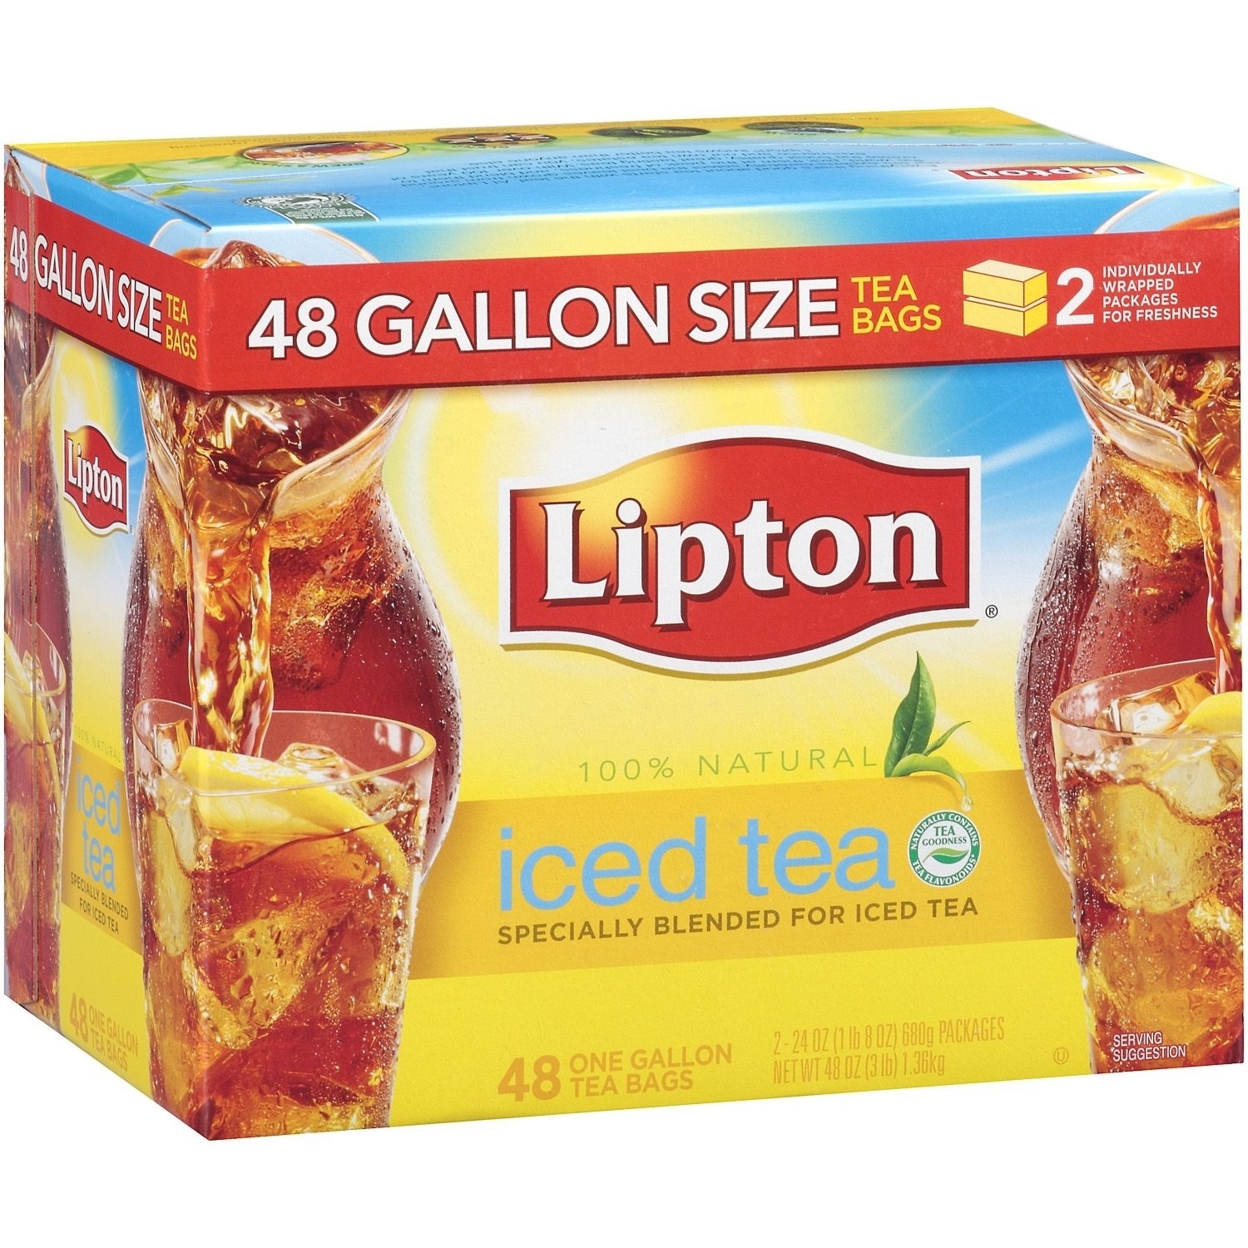 Lipton Iced Tea Brew Gallon Size Tea Bags - 48ct